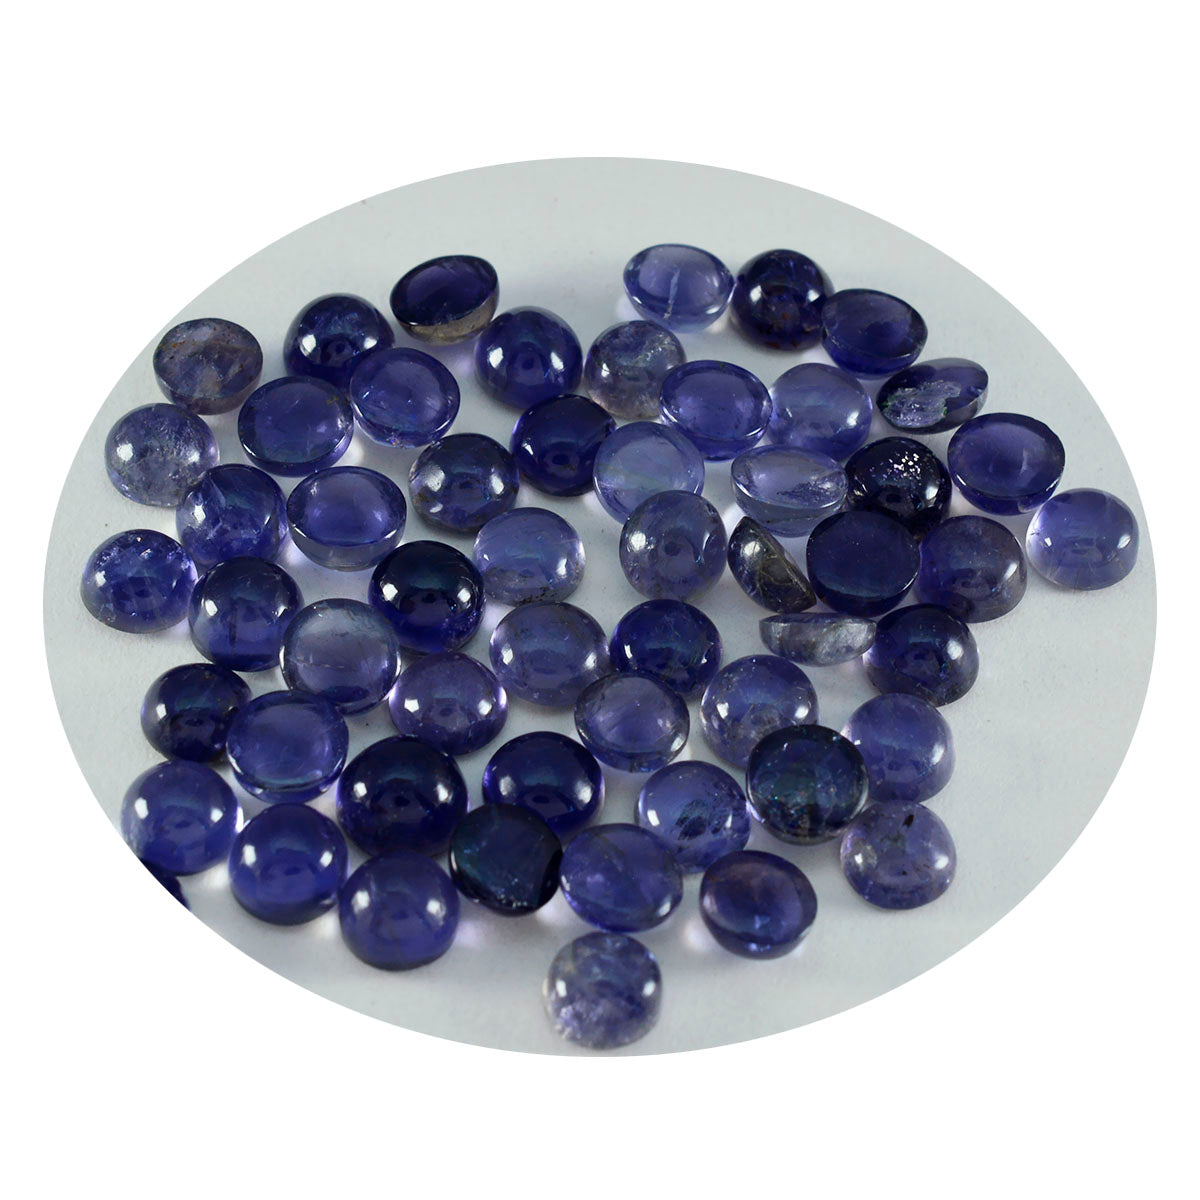 Riyogems 1PC Blue Iolite Cabochon 6x6 mm Round Shape AAA Quality Gemstone